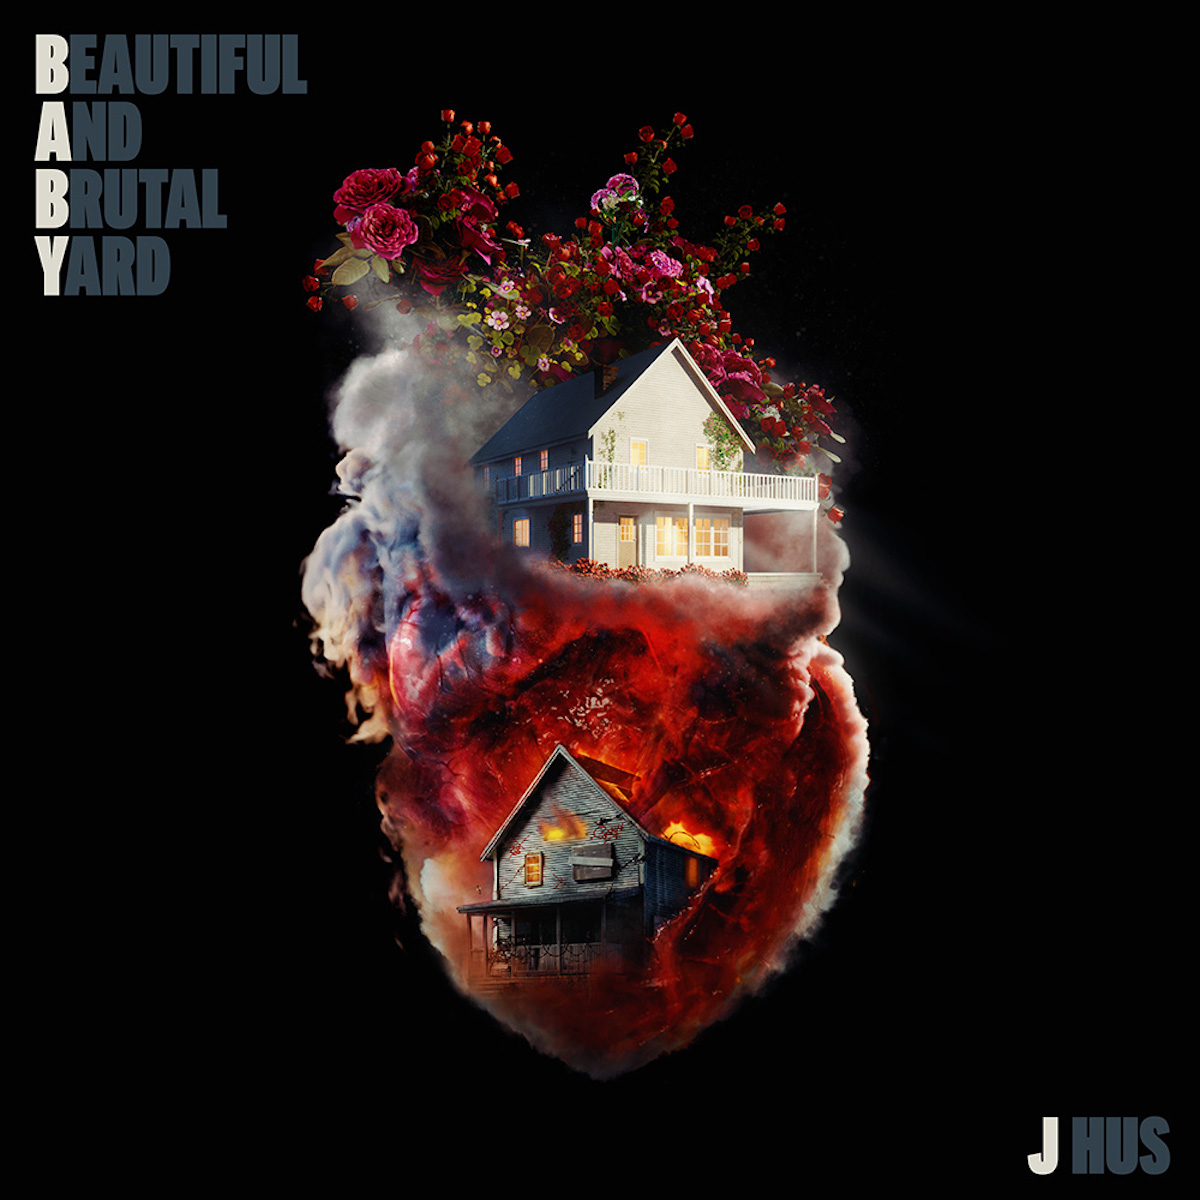 J Hus Releases New Album 'Beautiful and Brutal Yard'